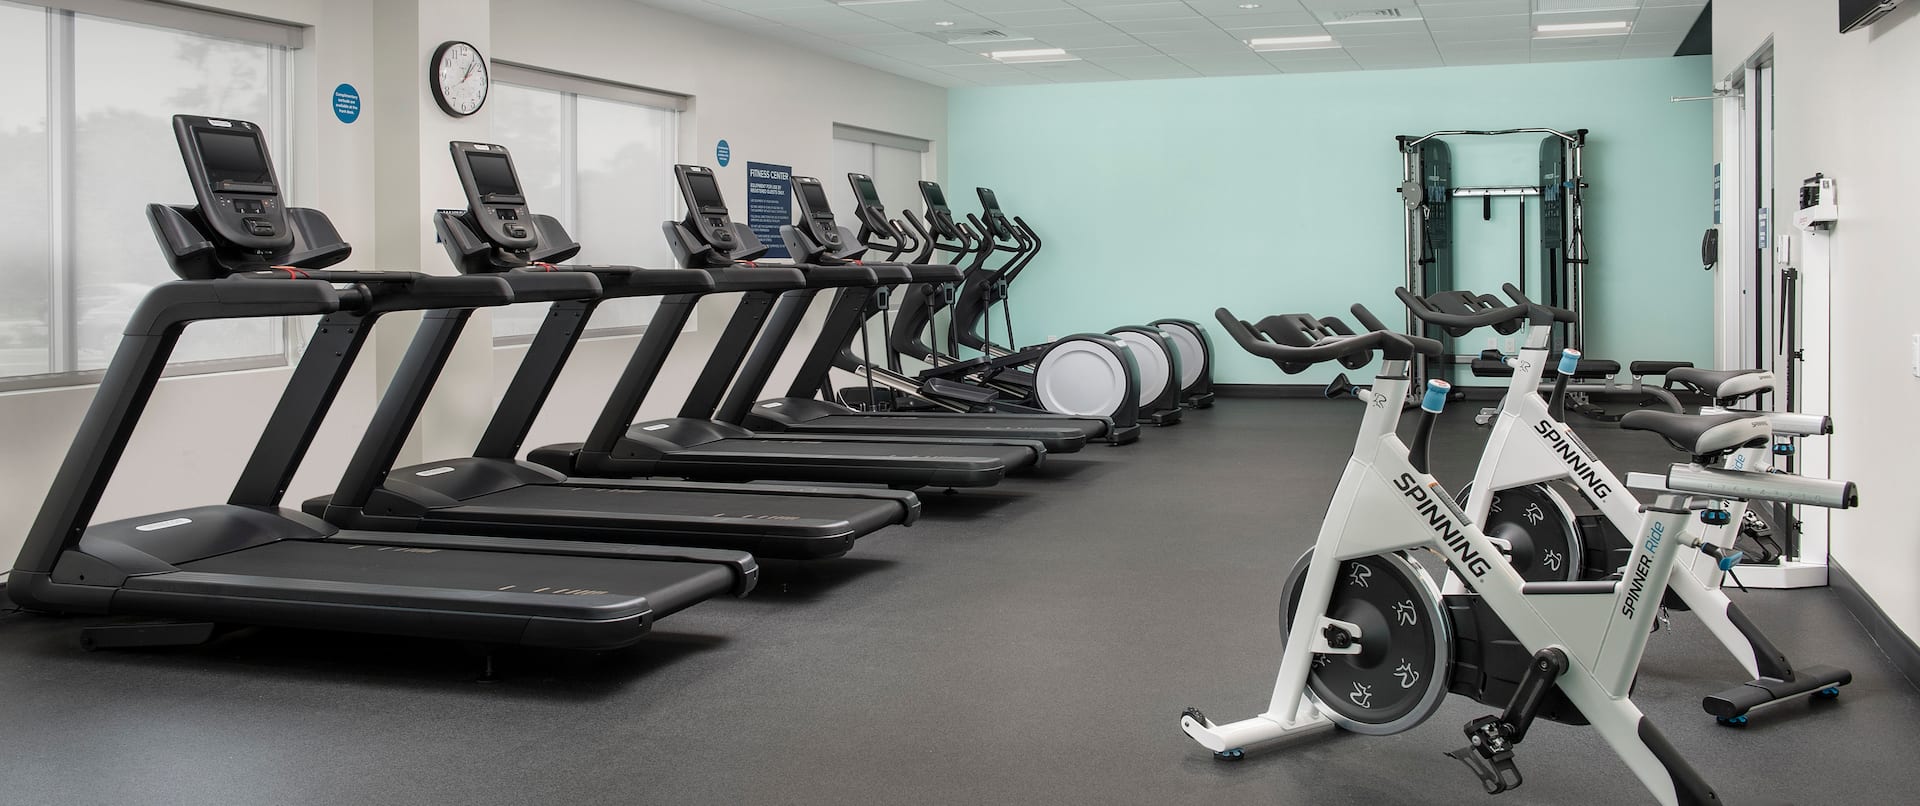 Gym Treadmills And Fitness Bikes